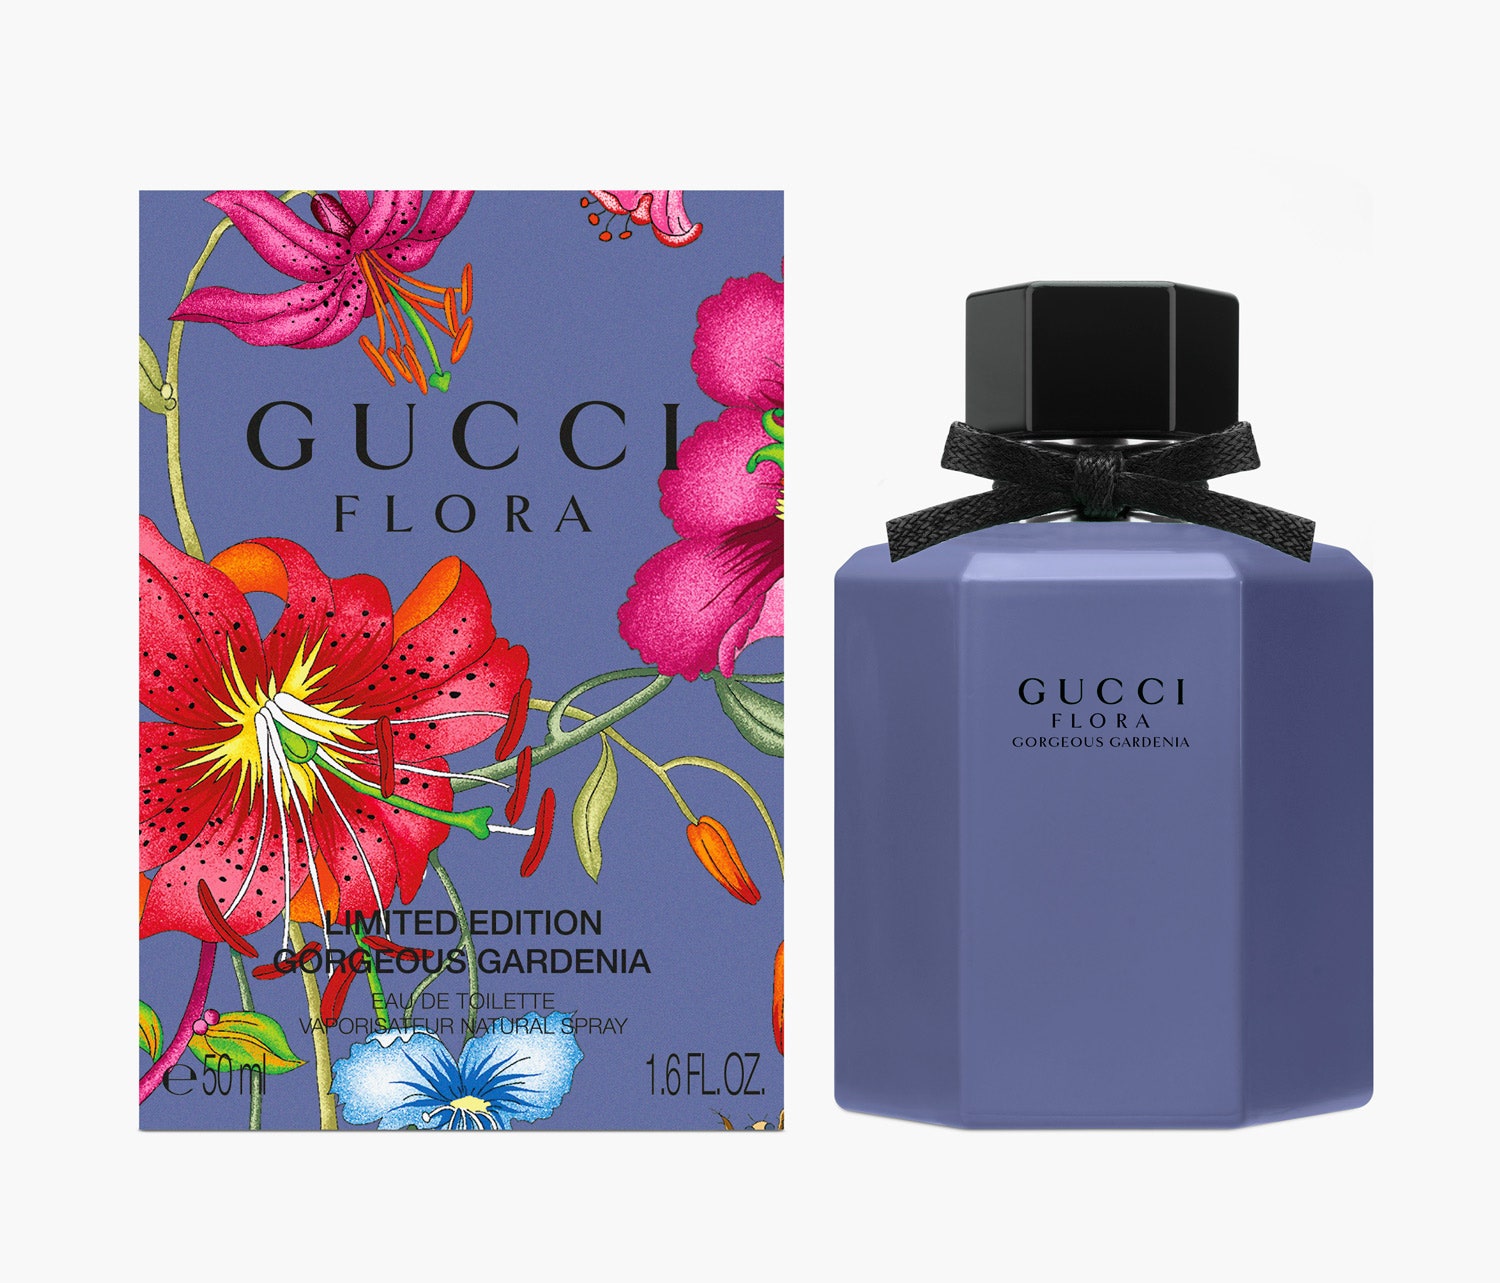 Объект желаний Gucci Flora Gorgeous Gardenia в лавандовом флаконе